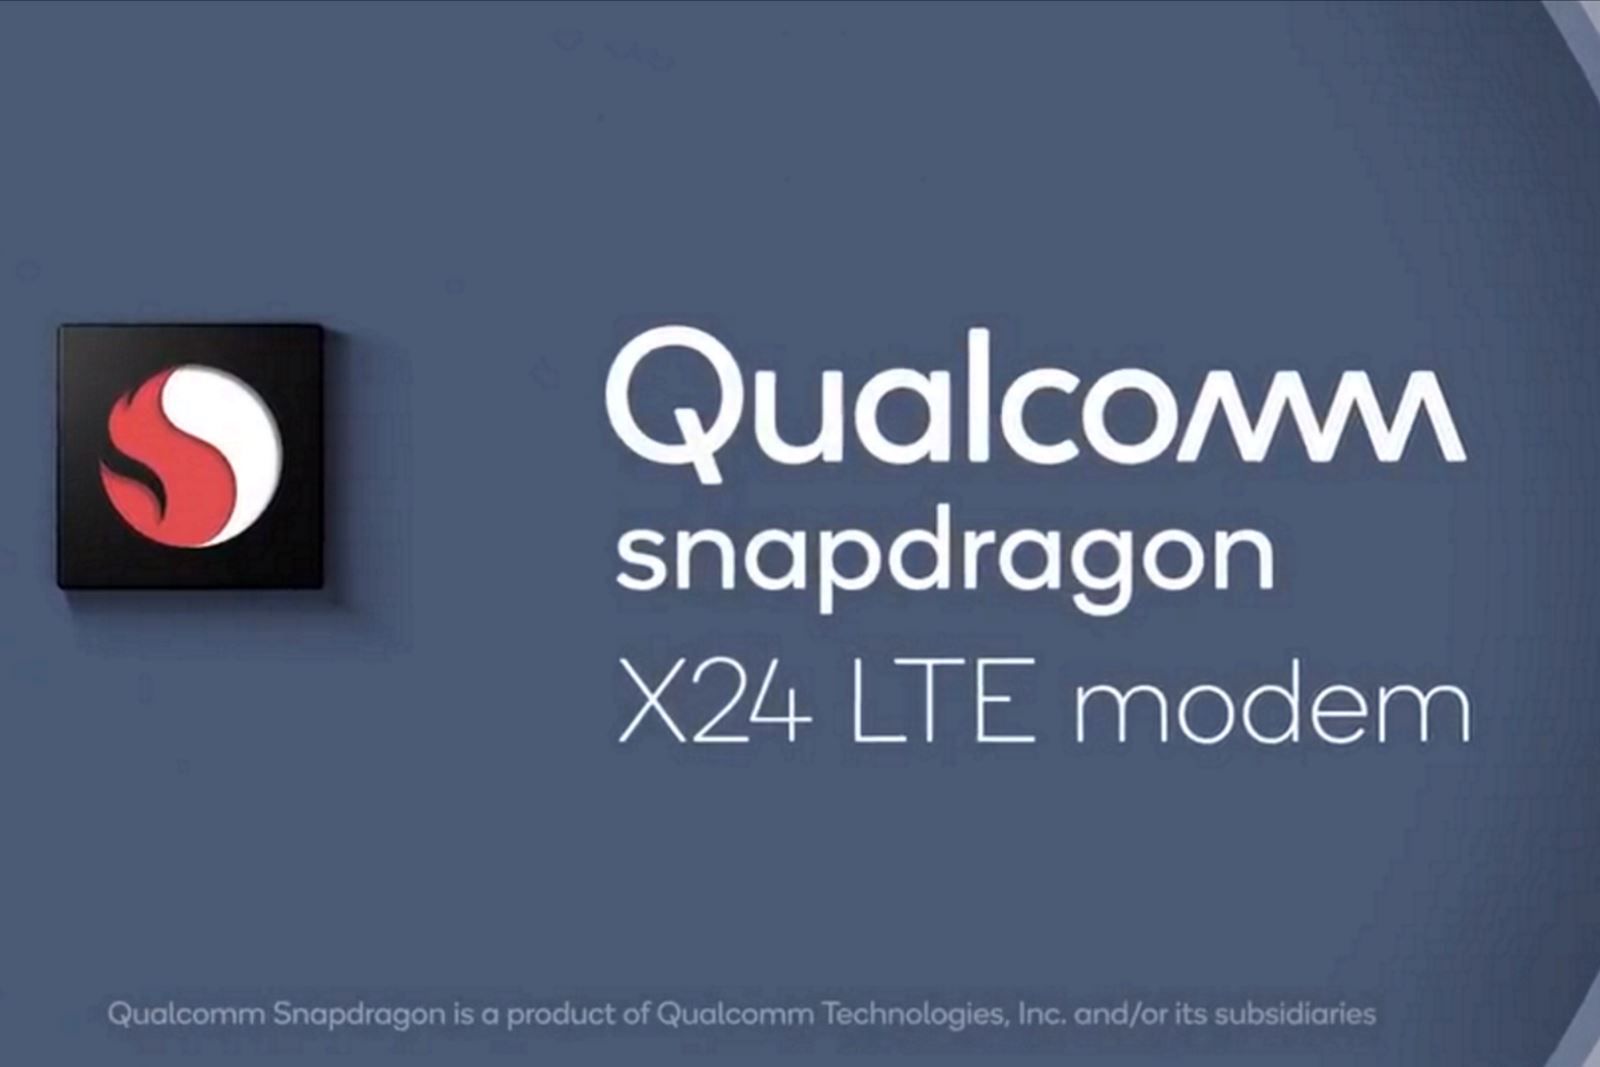 Qualcomm’s latest mobile modem promises ‘fibre-like internet speeds’ image 1